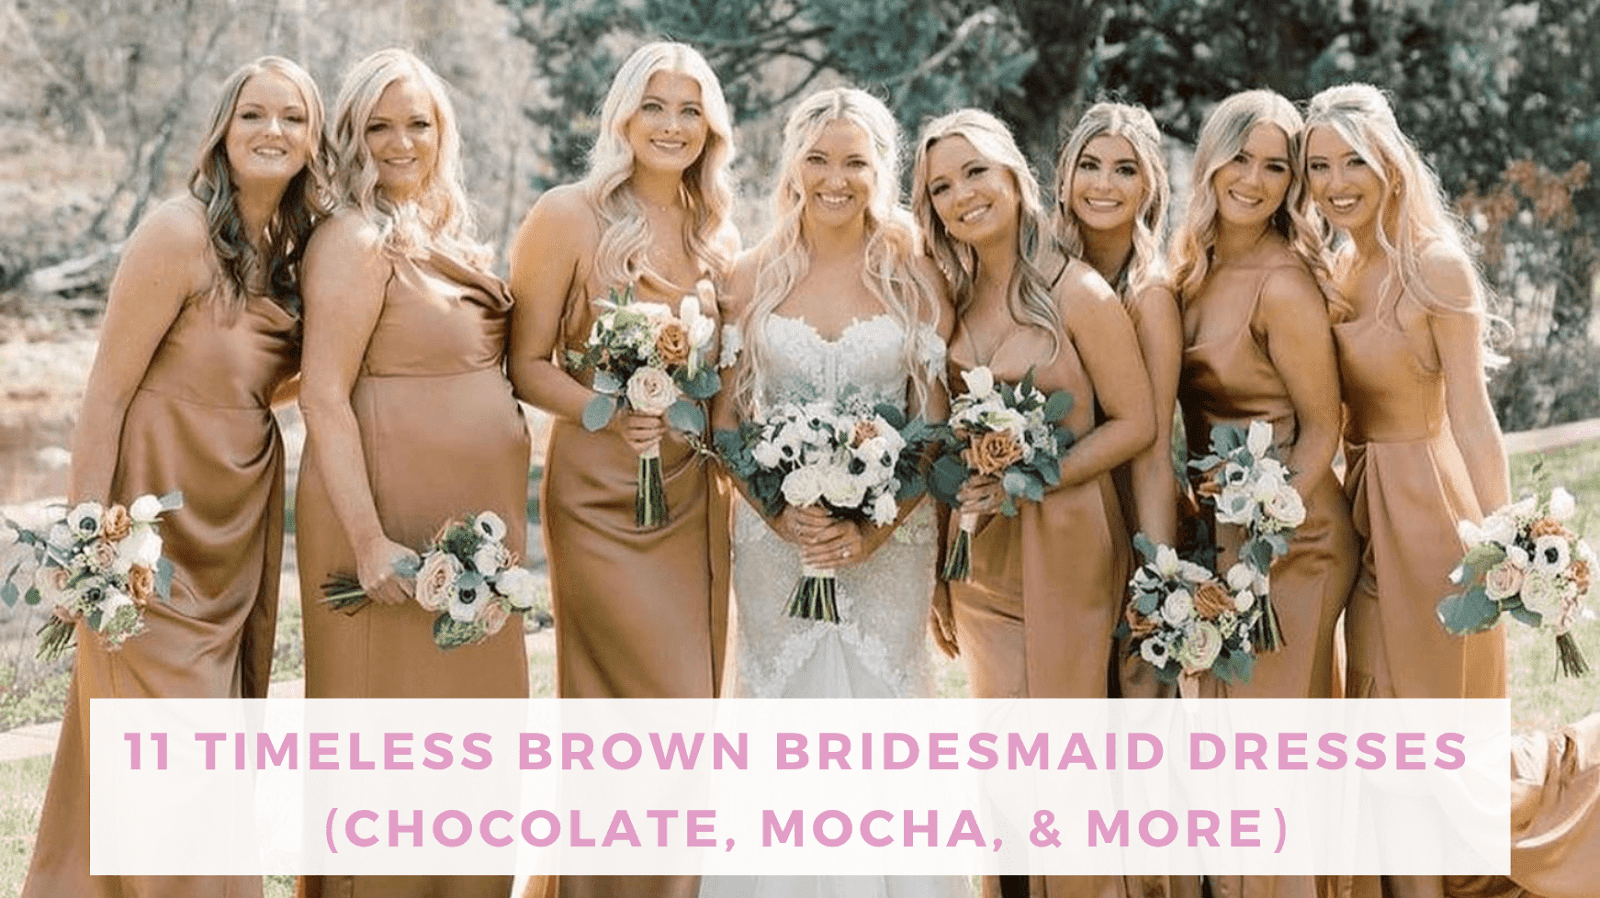 11 Timeless Brown Bridesmaid Dresses (Chocolate, Mocha, & More